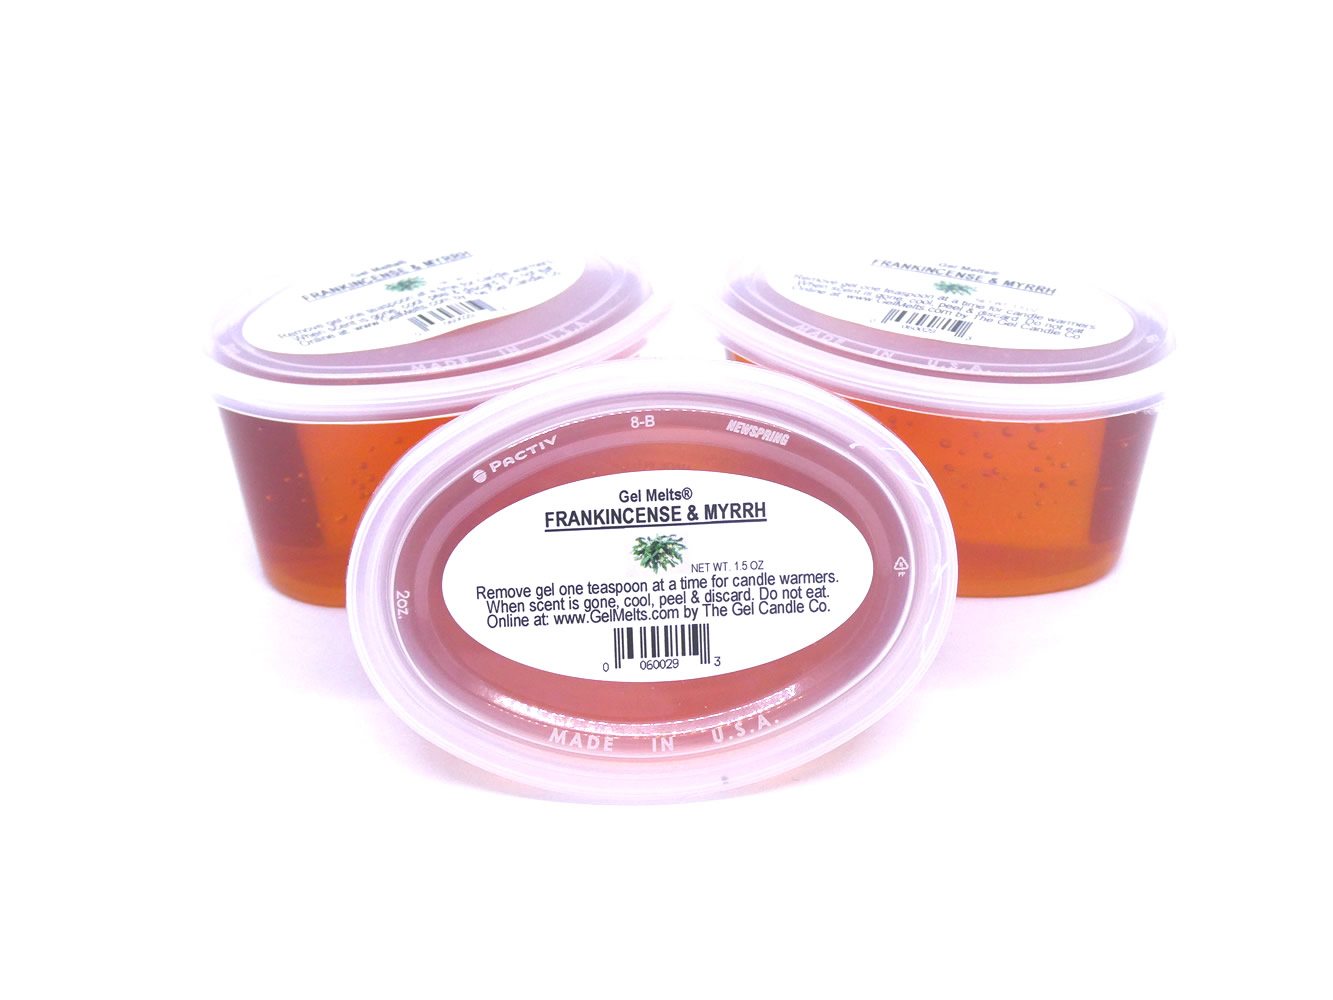 Frakincense And Myrrh scented Gel Melts™ for warmers - 3 pack